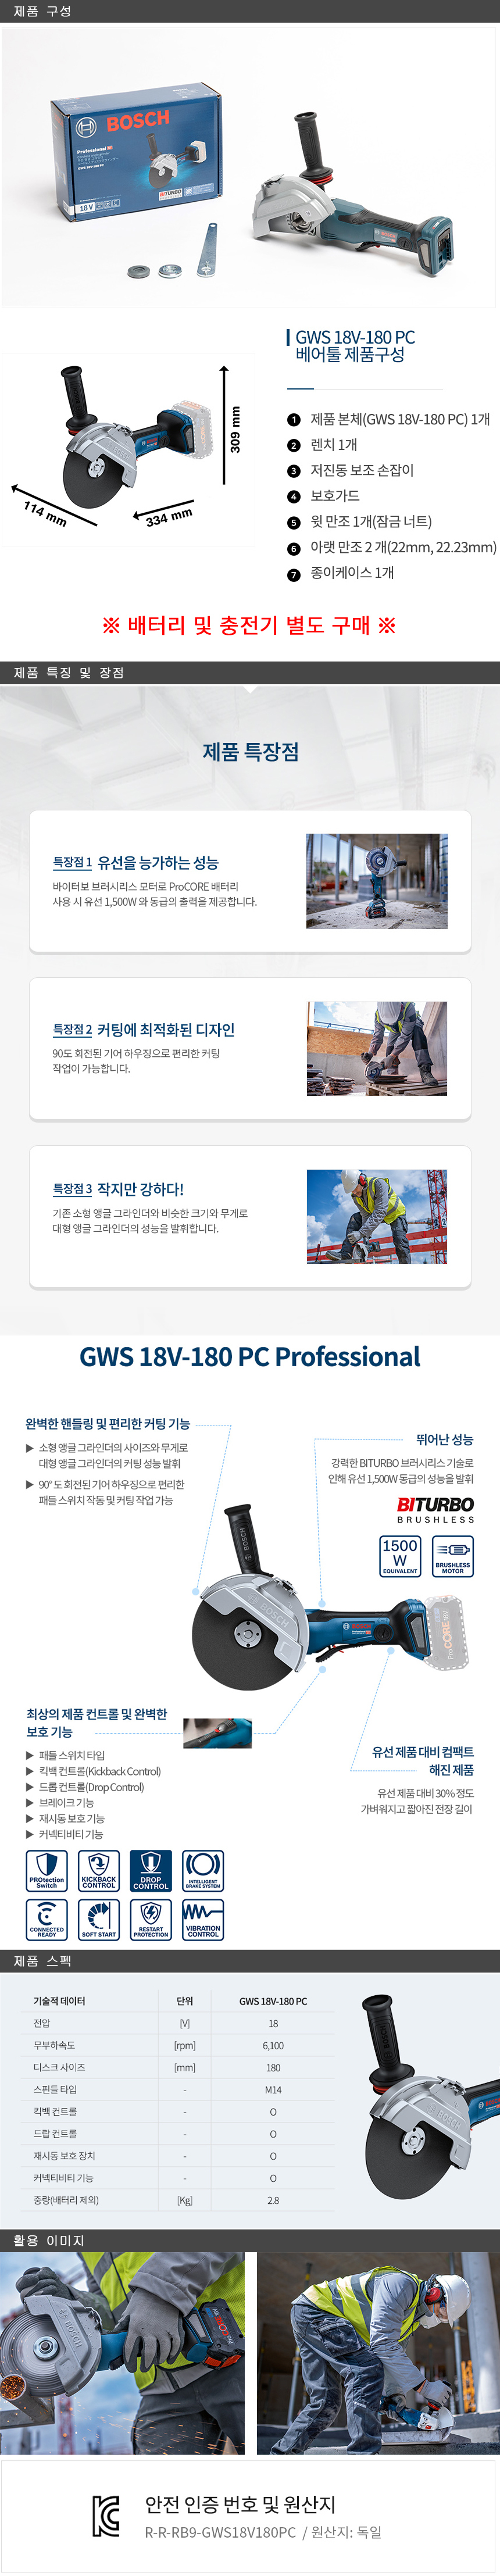 GWS18V-180PC%201.jpg